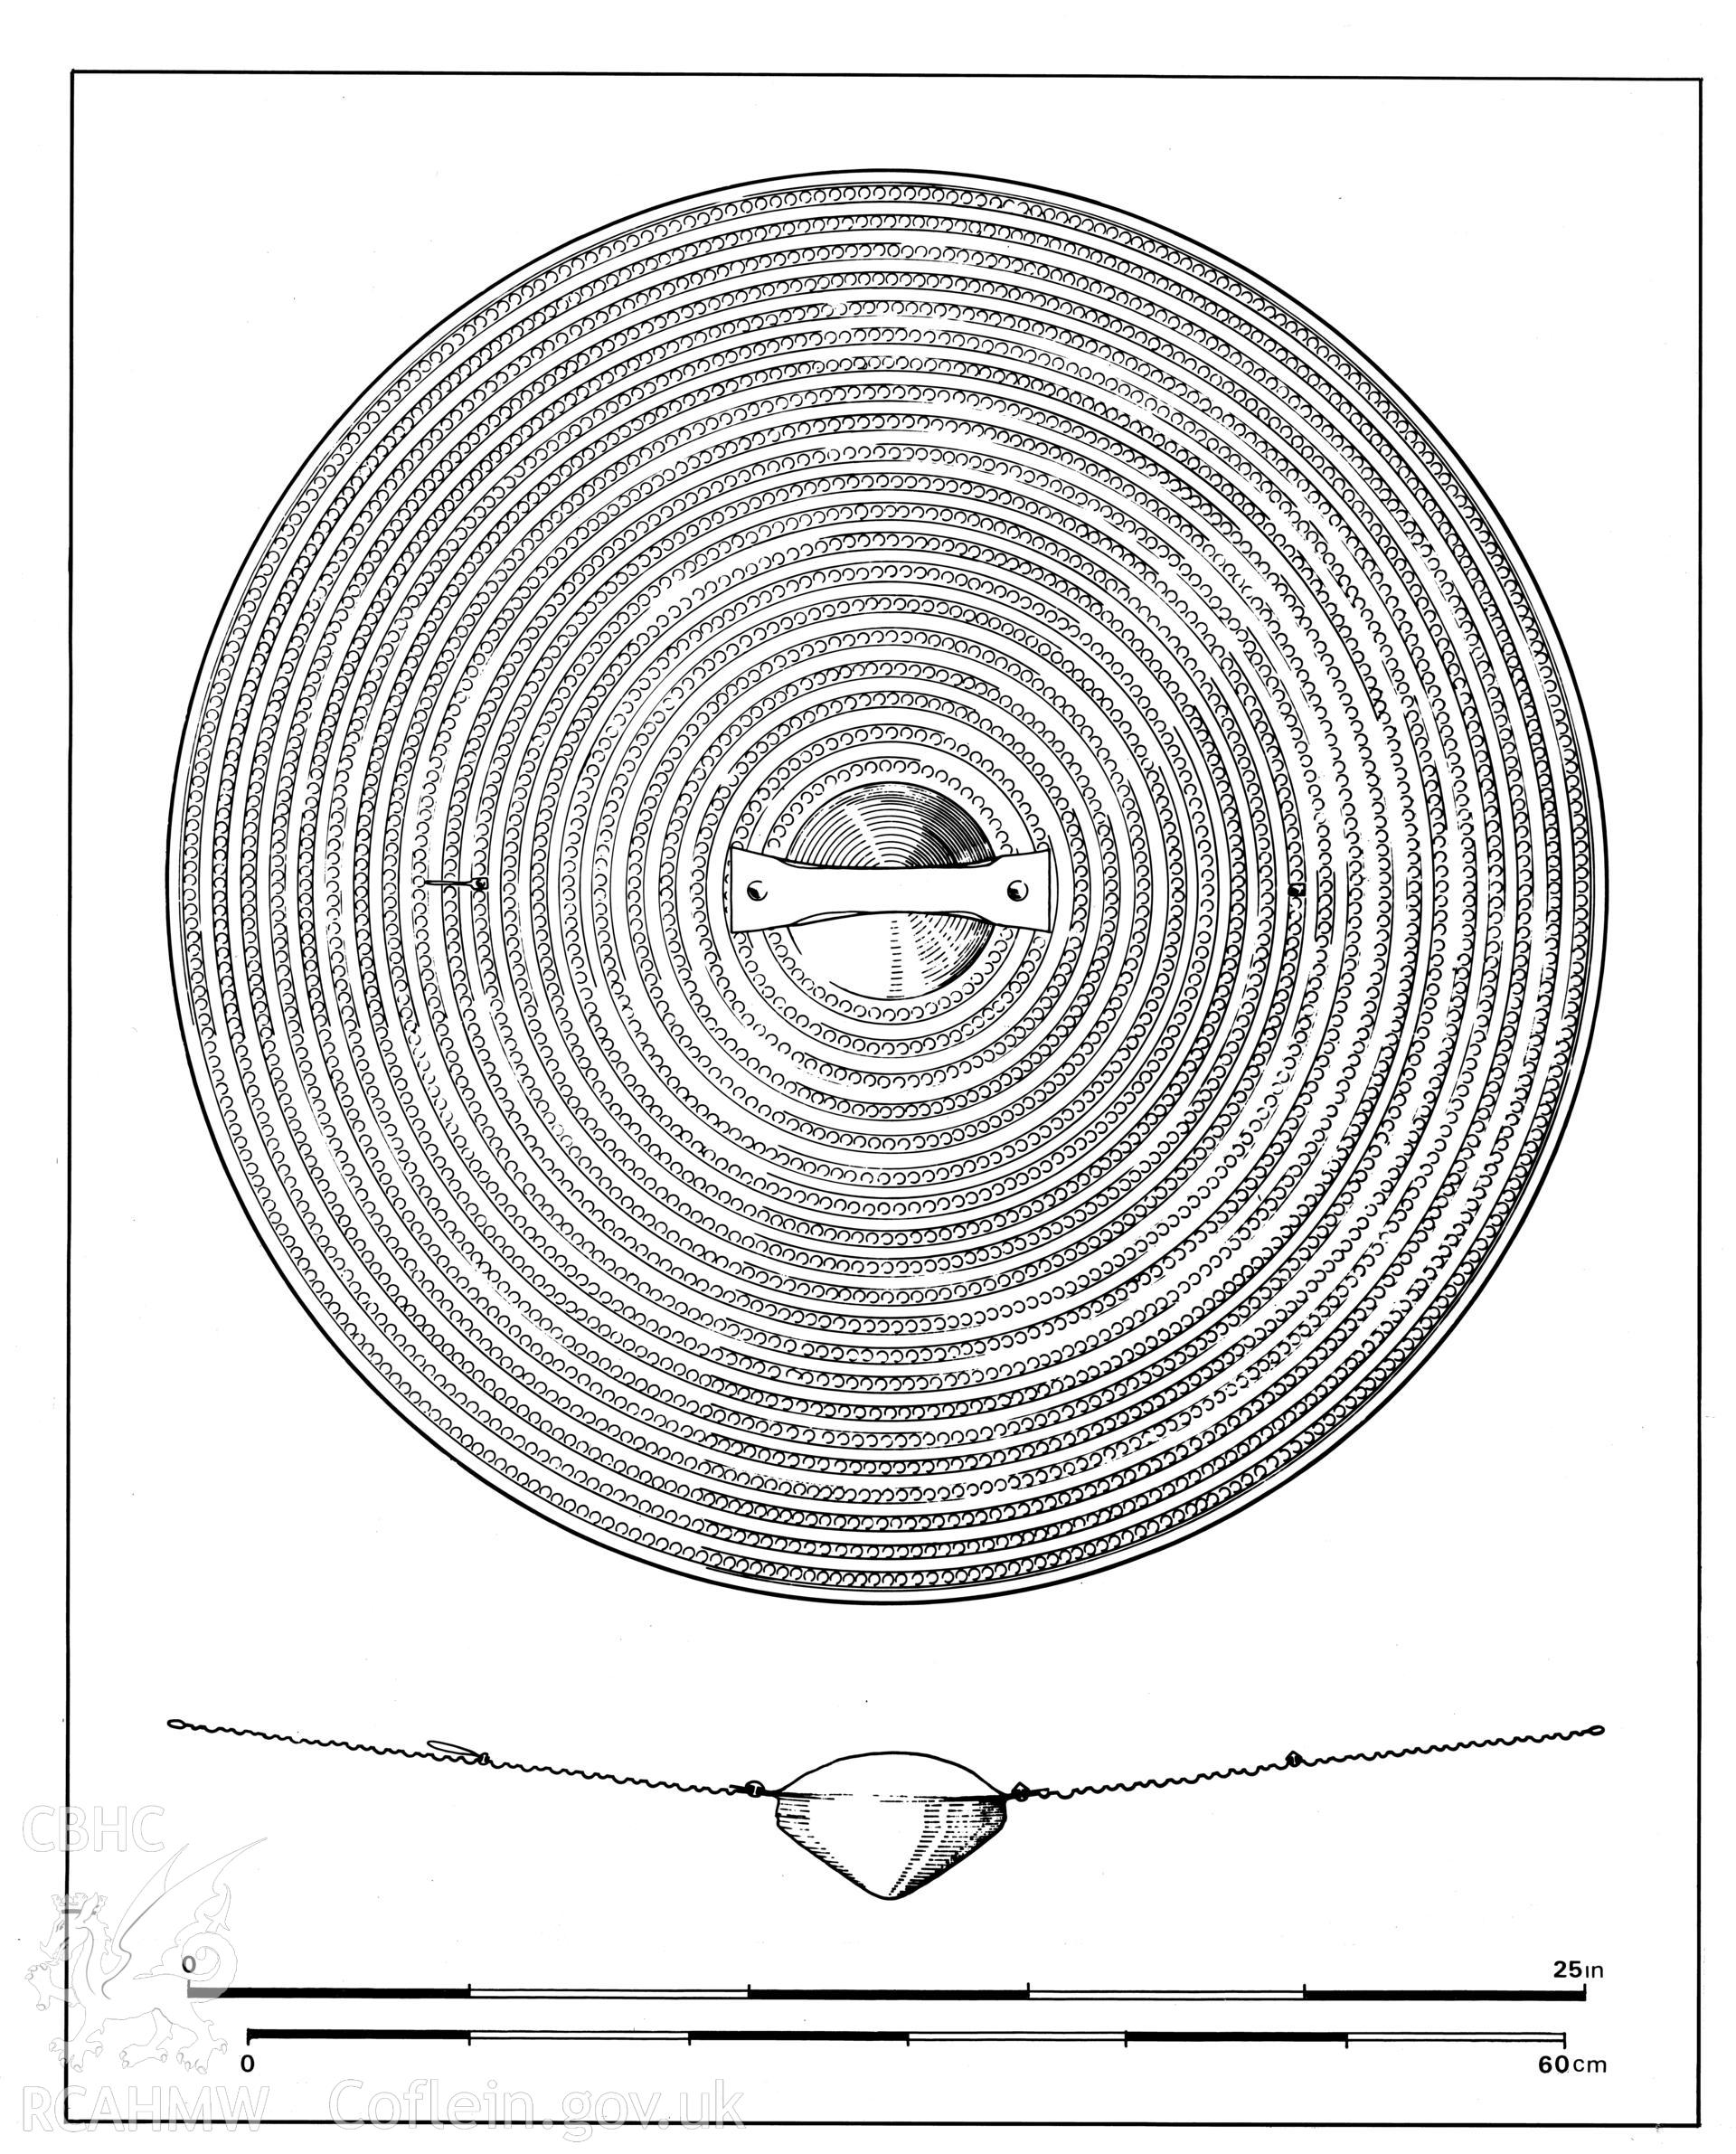 Volume 1, Figure 35: 'Bronze Age shield, Glan-rhos'.